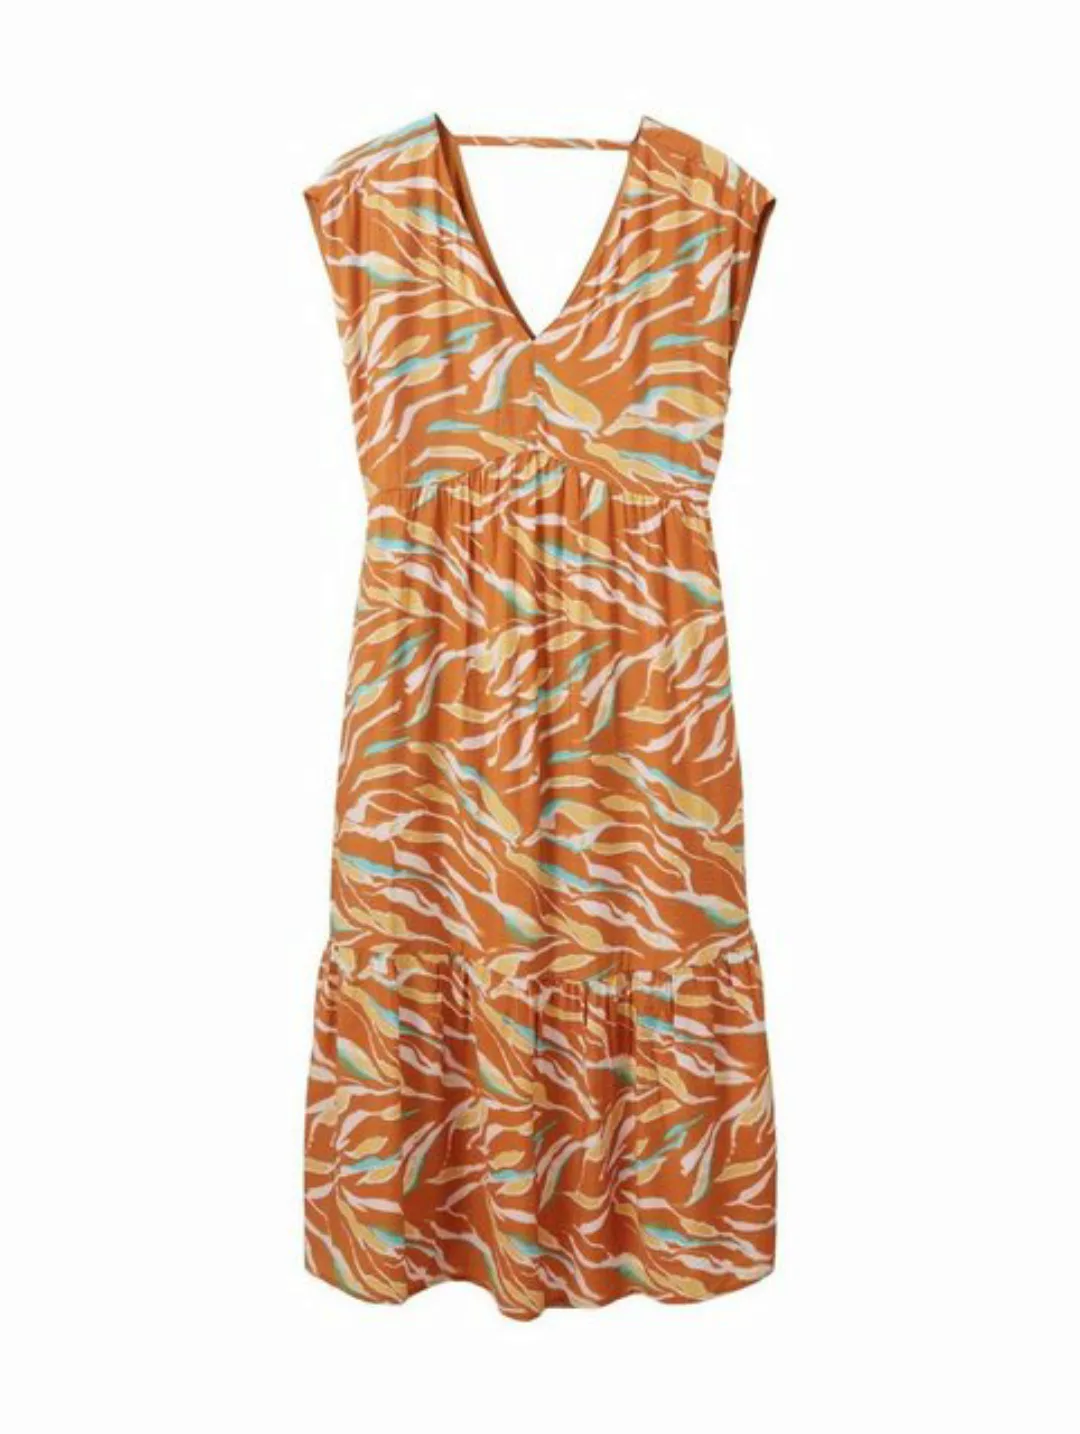 TOM TAILOR Sommerkleid feminine printed dress, brown abstract leaf design günstig online kaufen